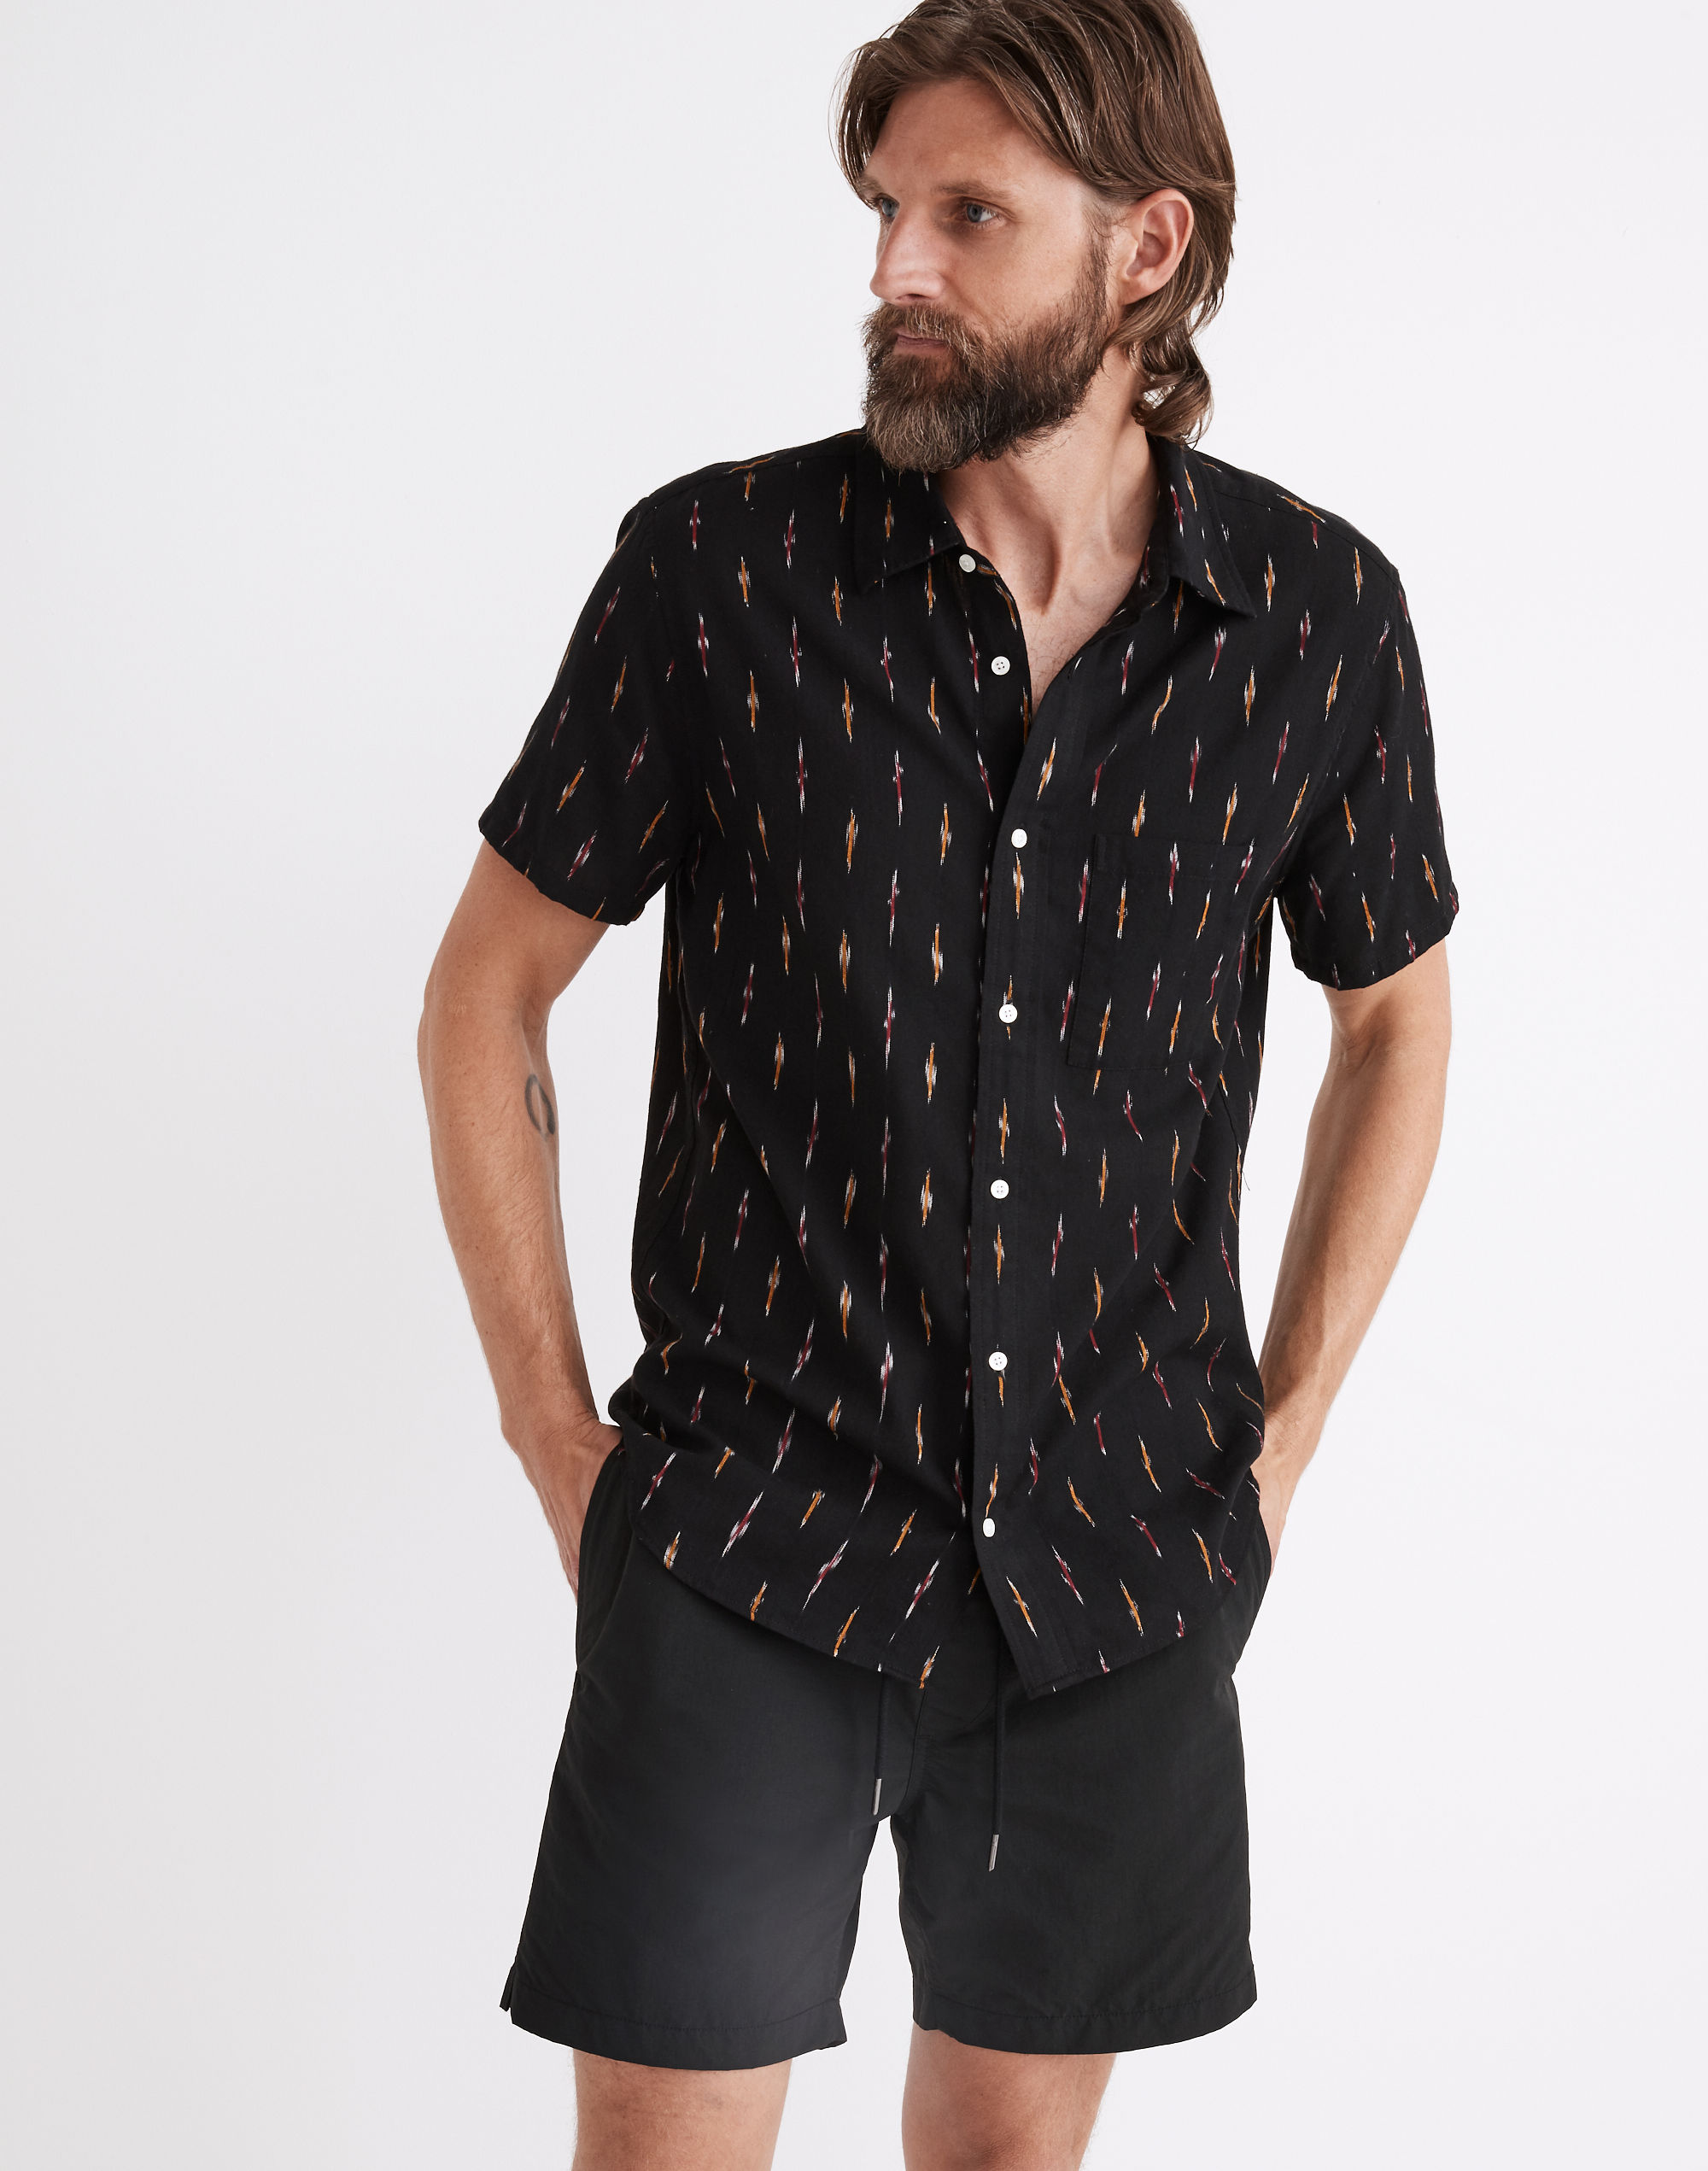 Short-Sleeve Perfect Shirt in Ikat Dash